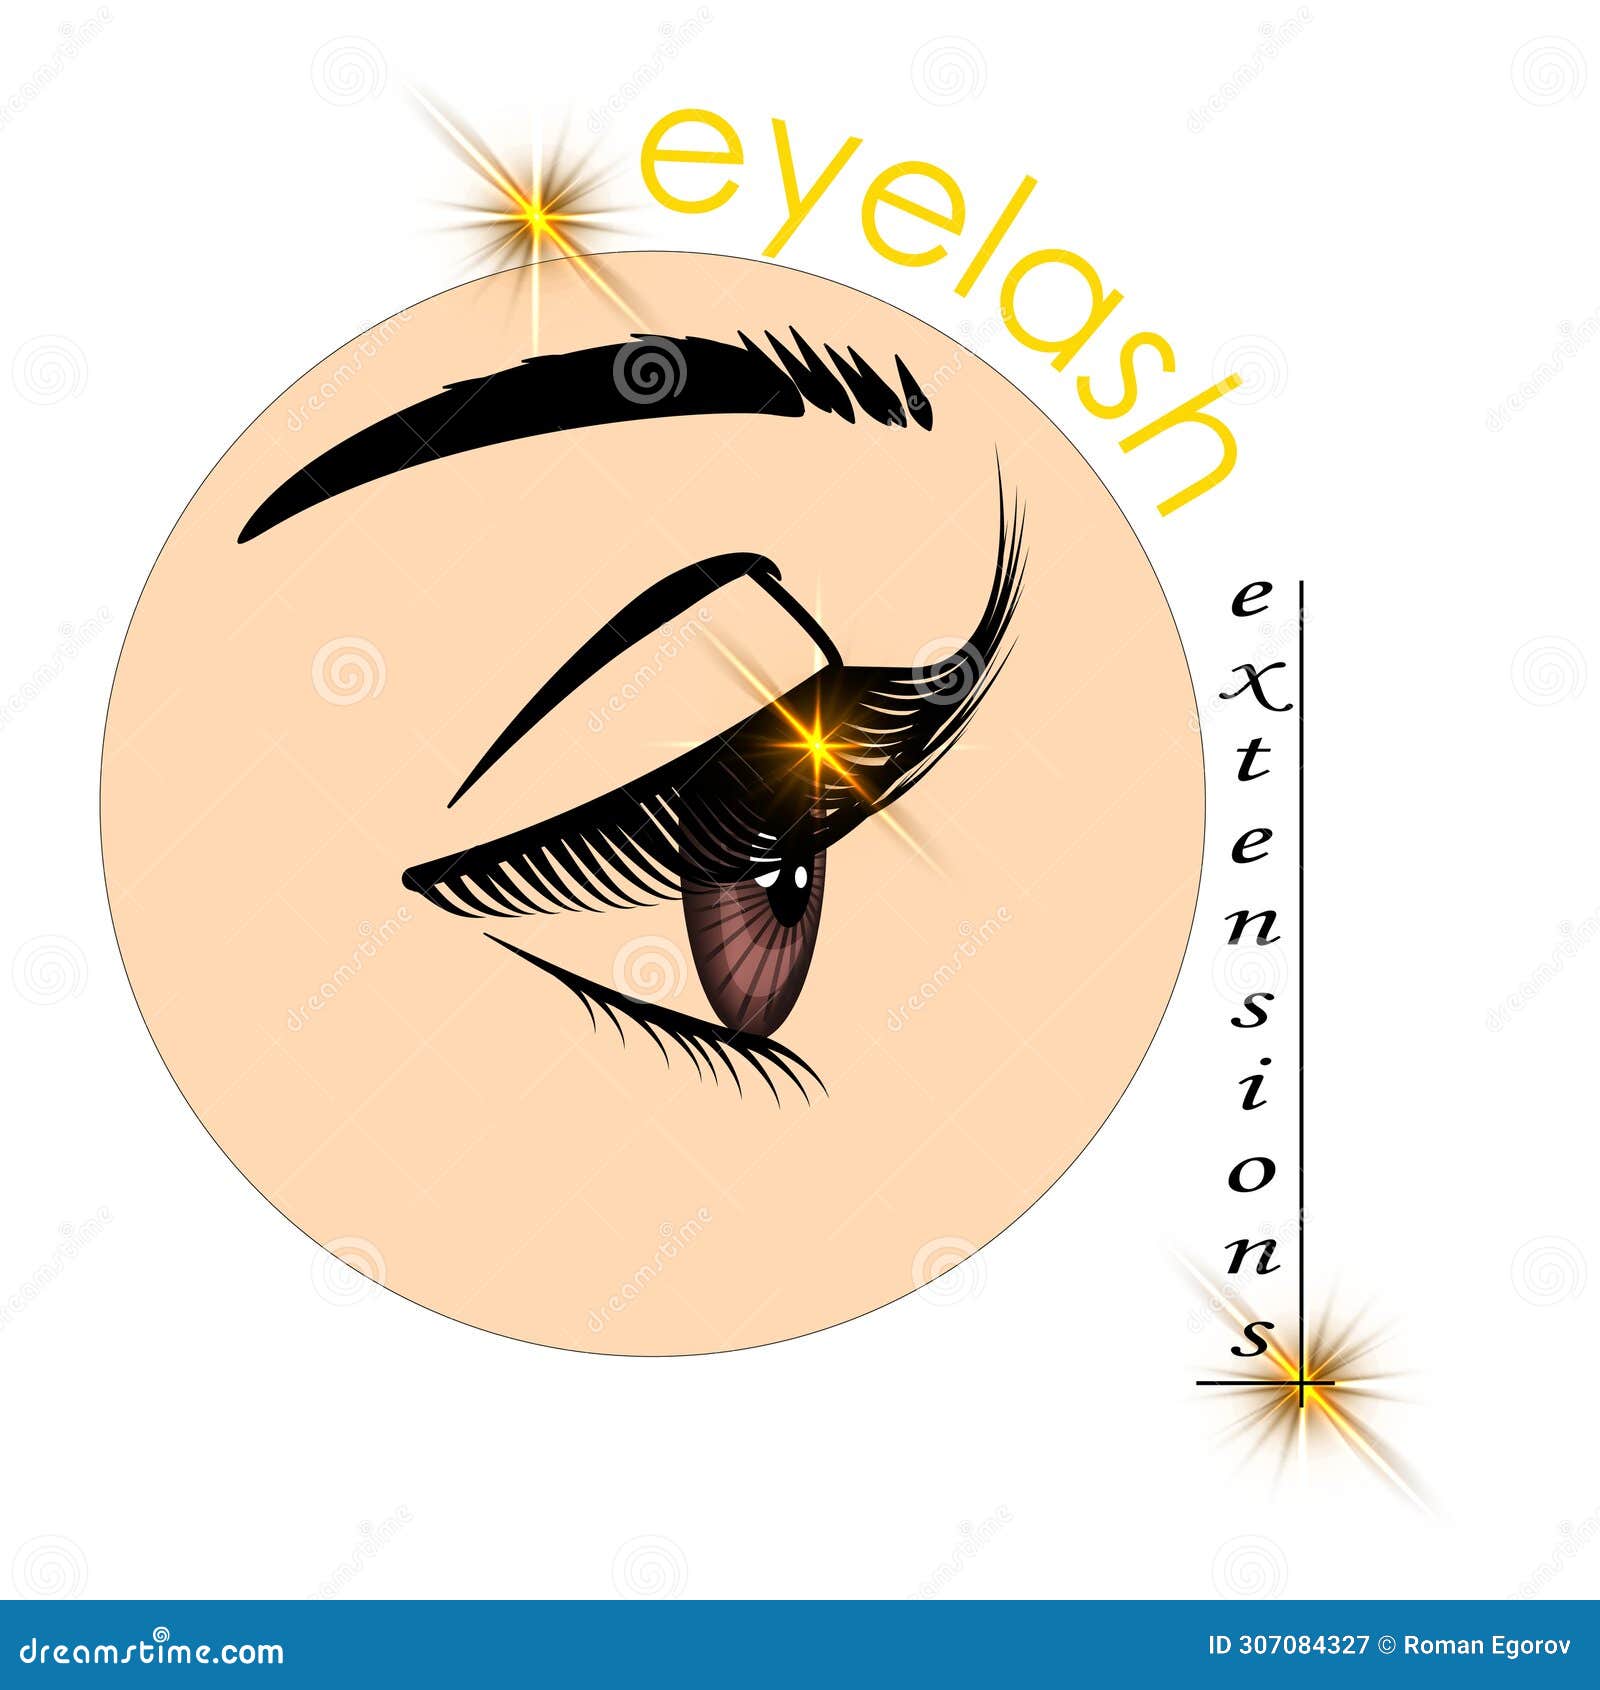 eyelash extension. beauty salon banner. lengthening mascara. makeup procedure. false lash. cosmetologist service. eye